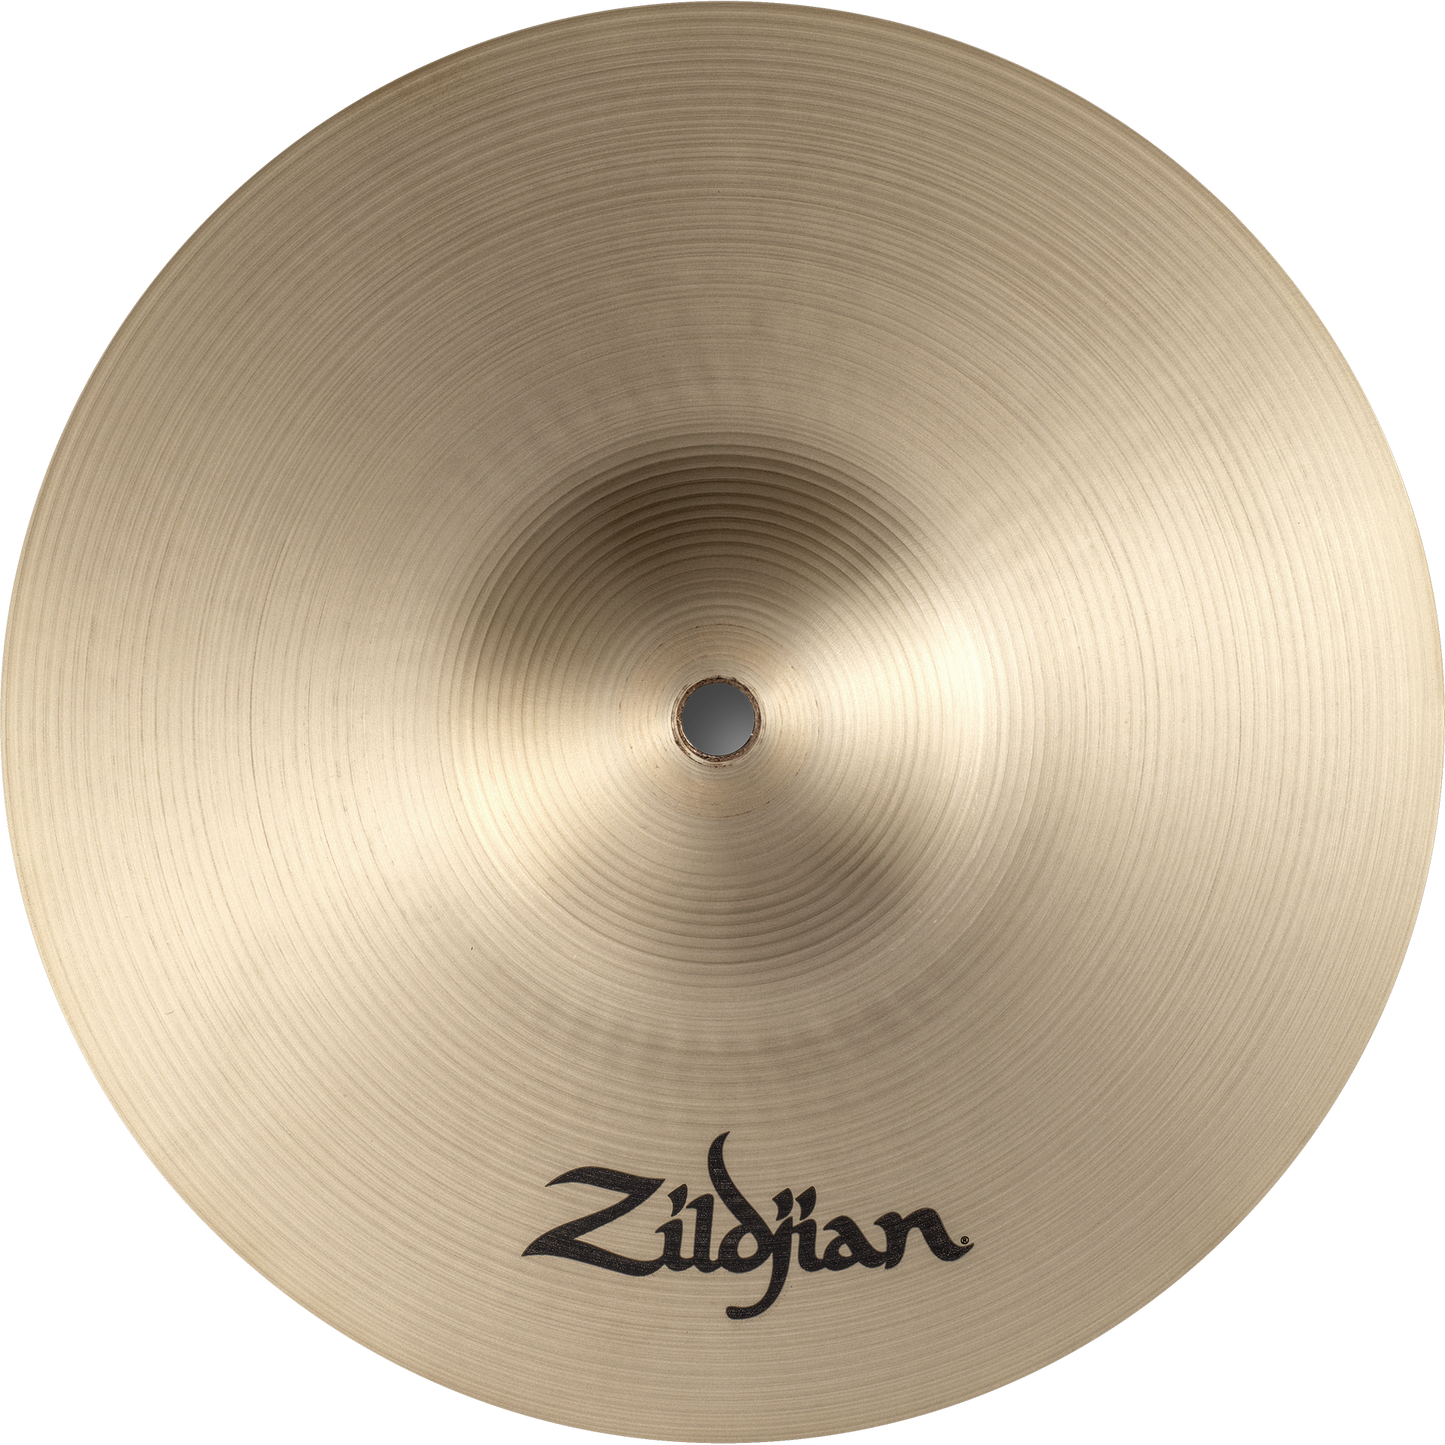 Zildjian 10” A Series Splash Cymbal